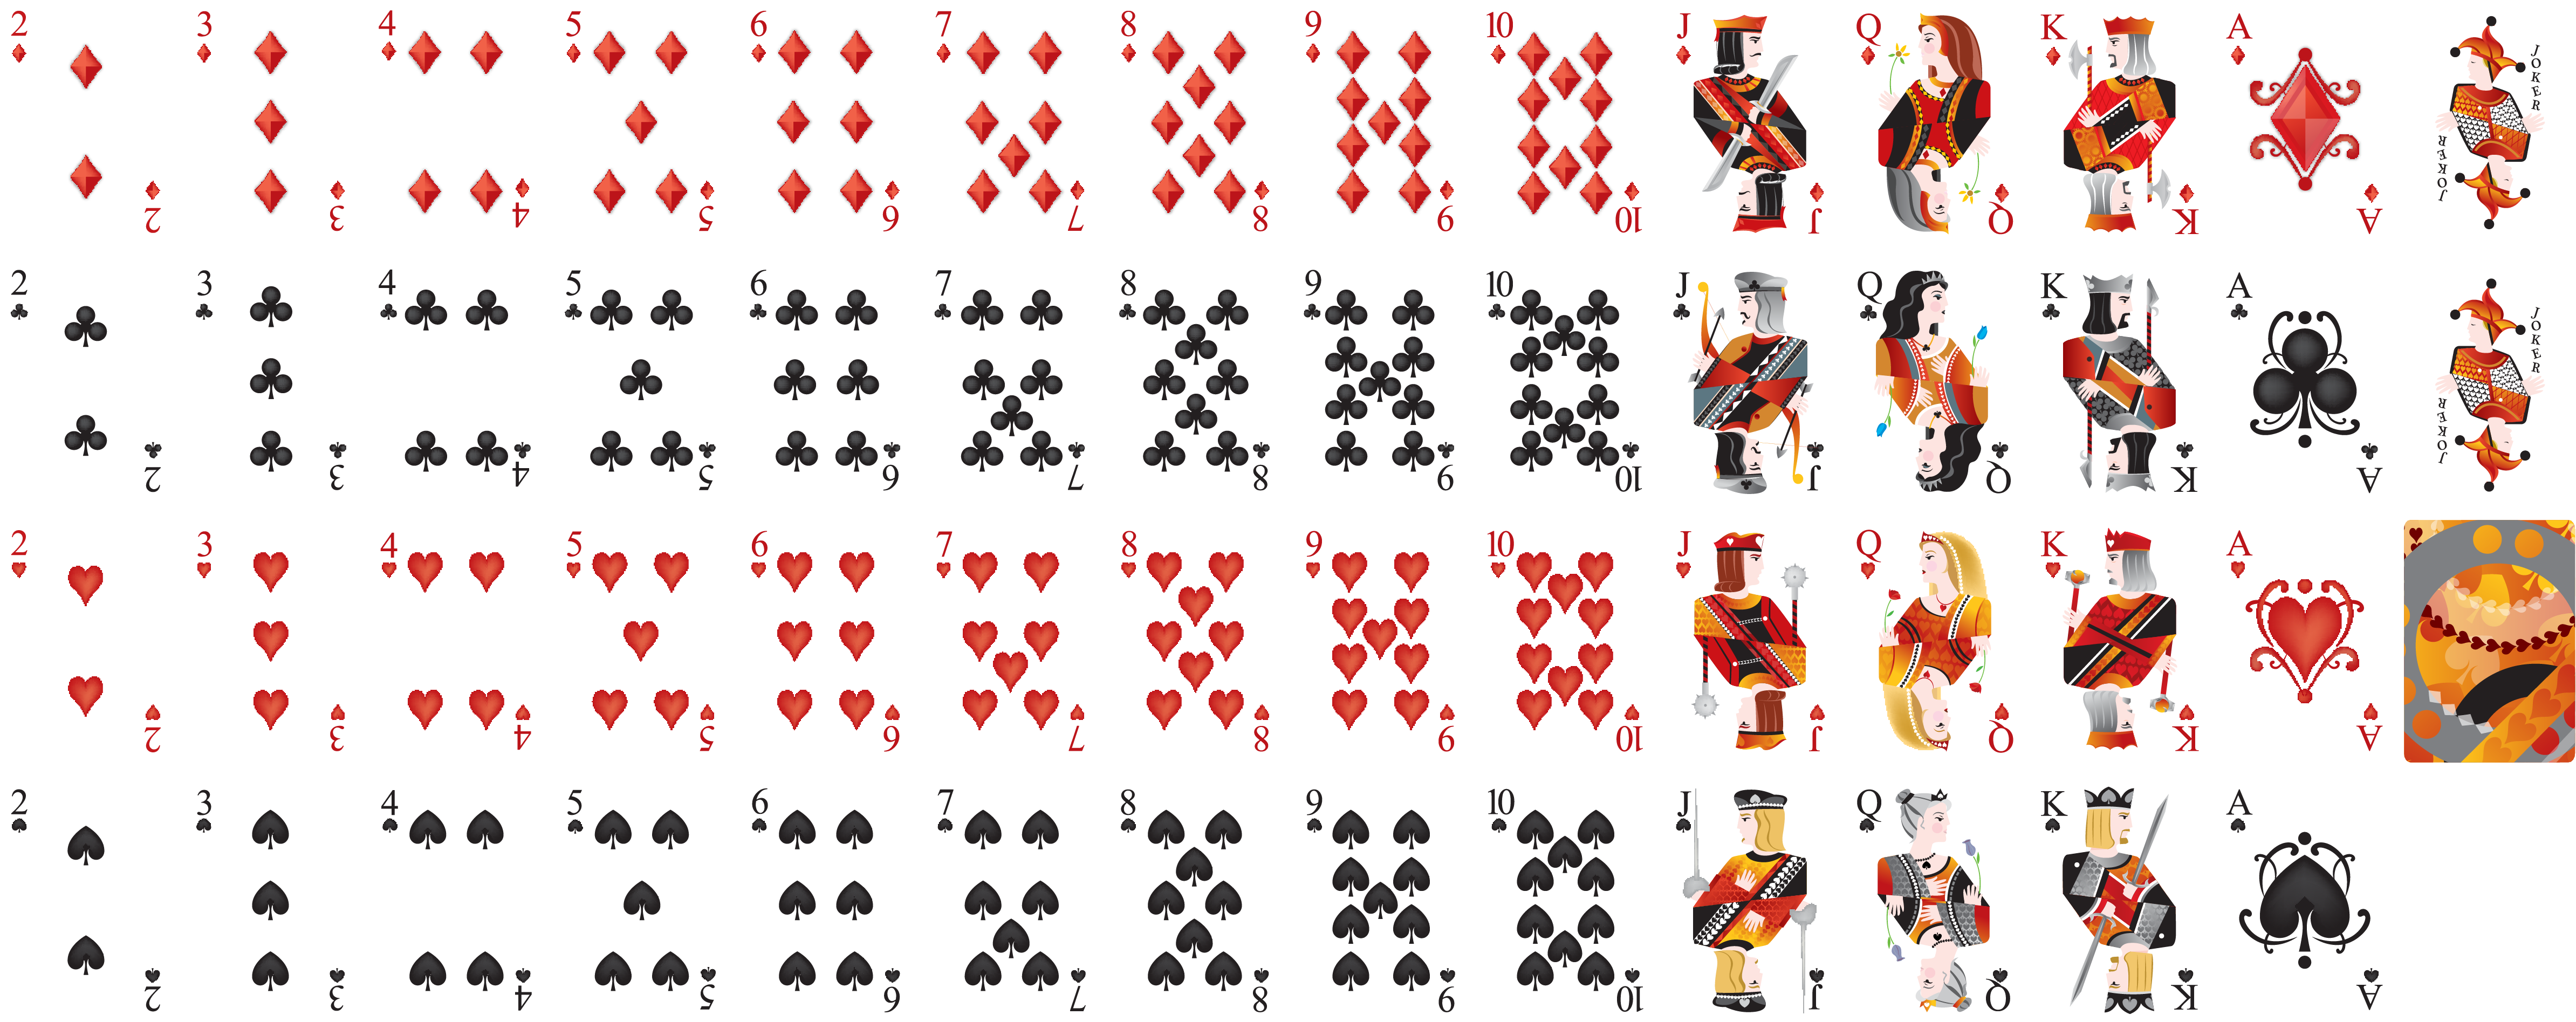 printable-uno-card-deck-entries-variety